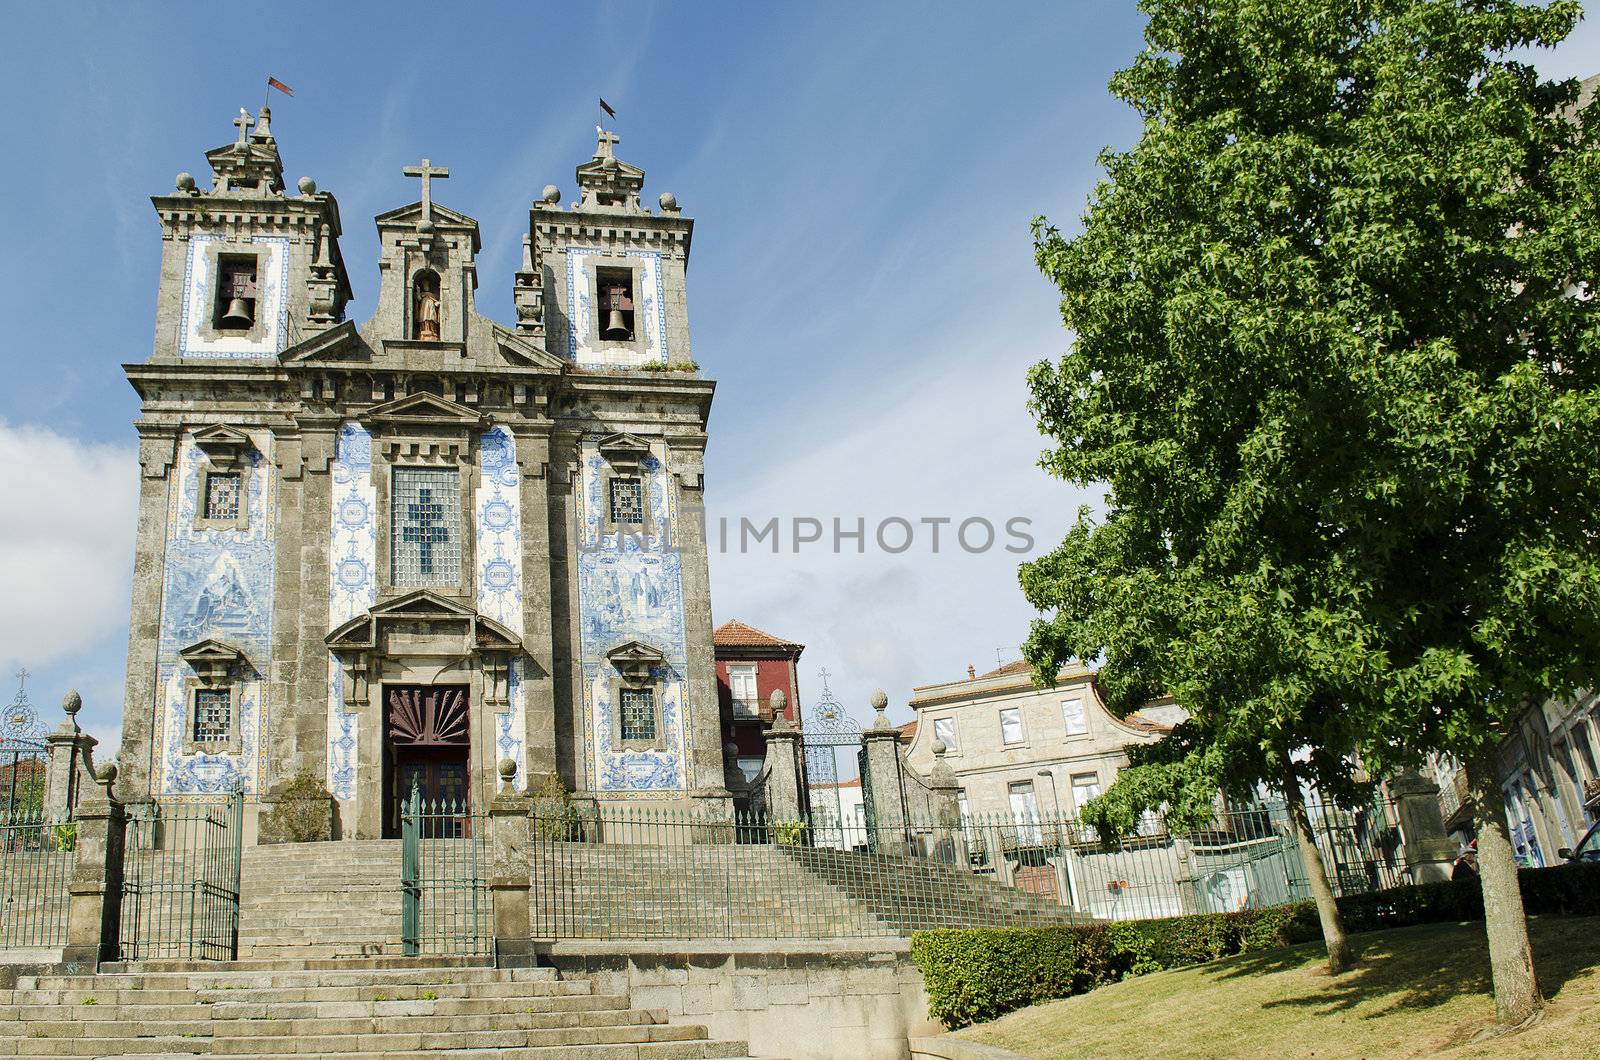 santo ildefonso church in porto portugal by jackmalipan